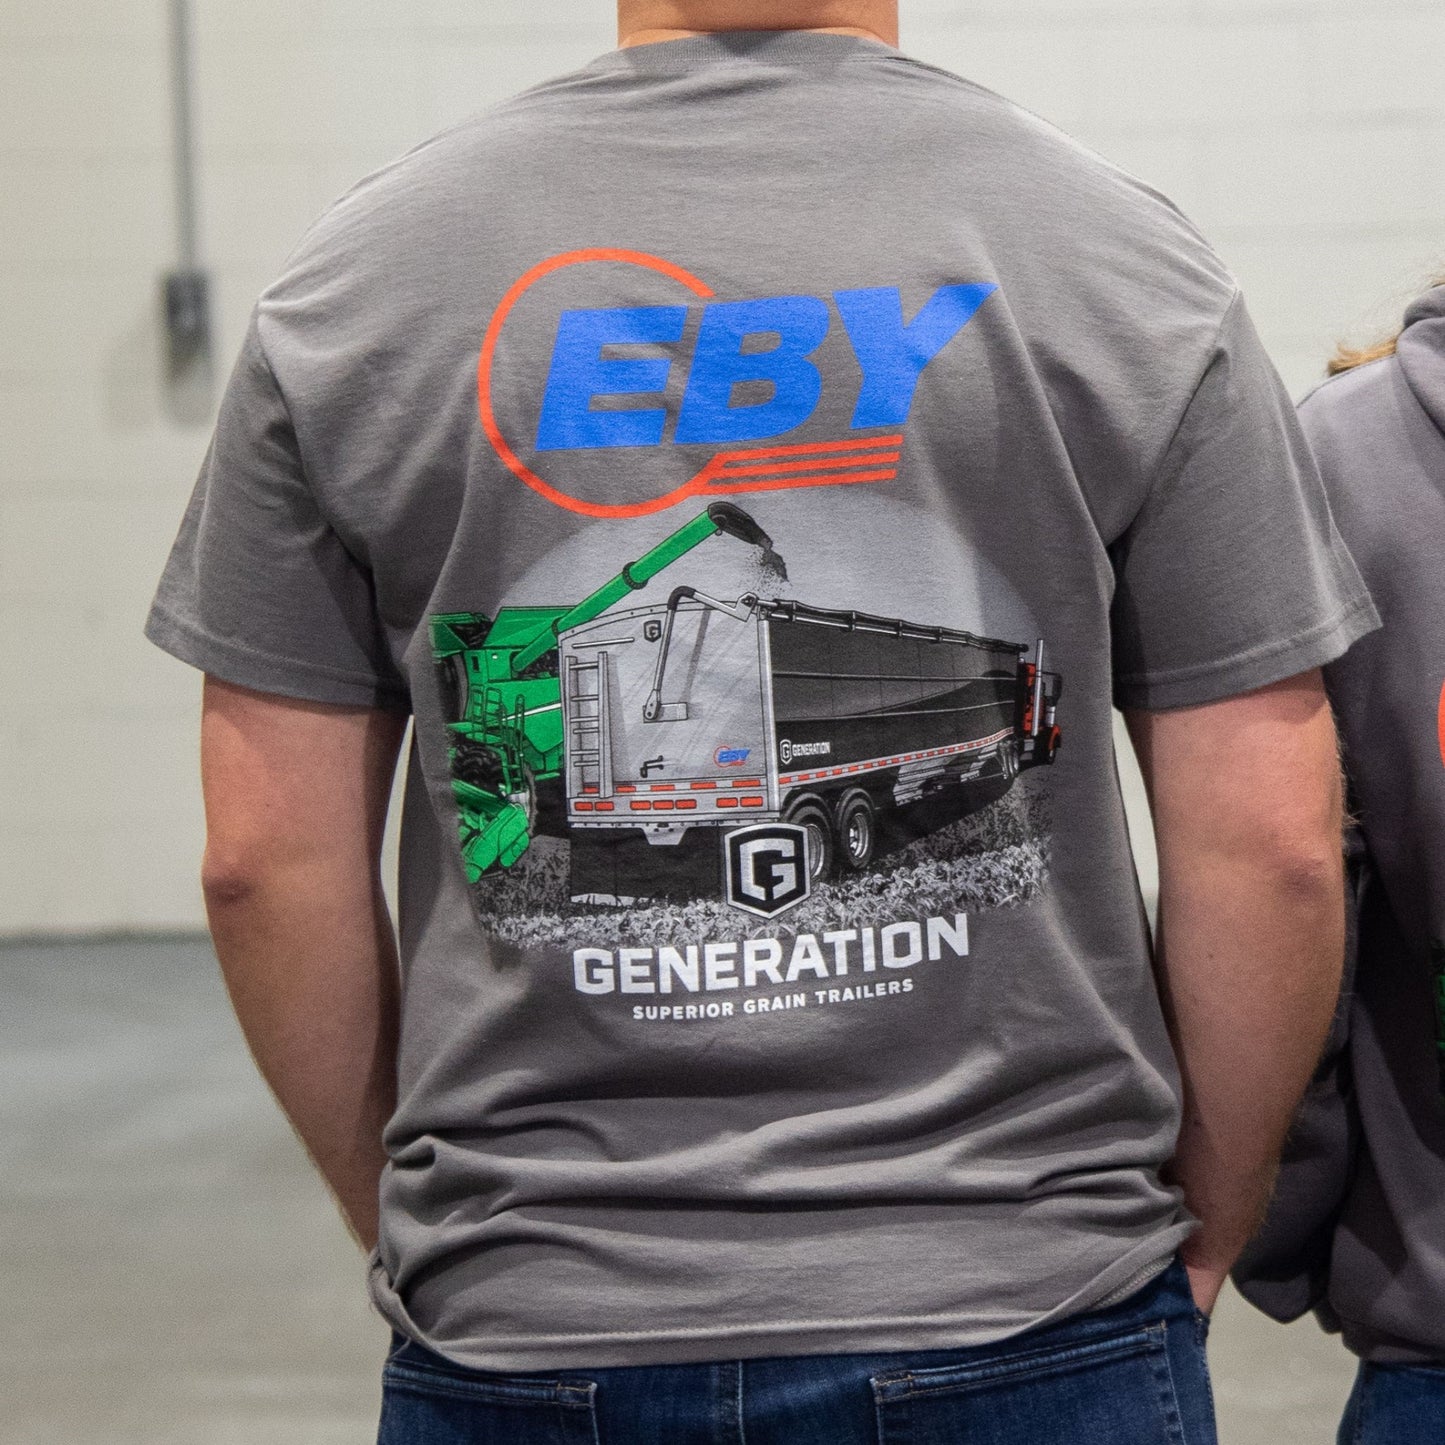 Eby Generation T-Shirt - Gray